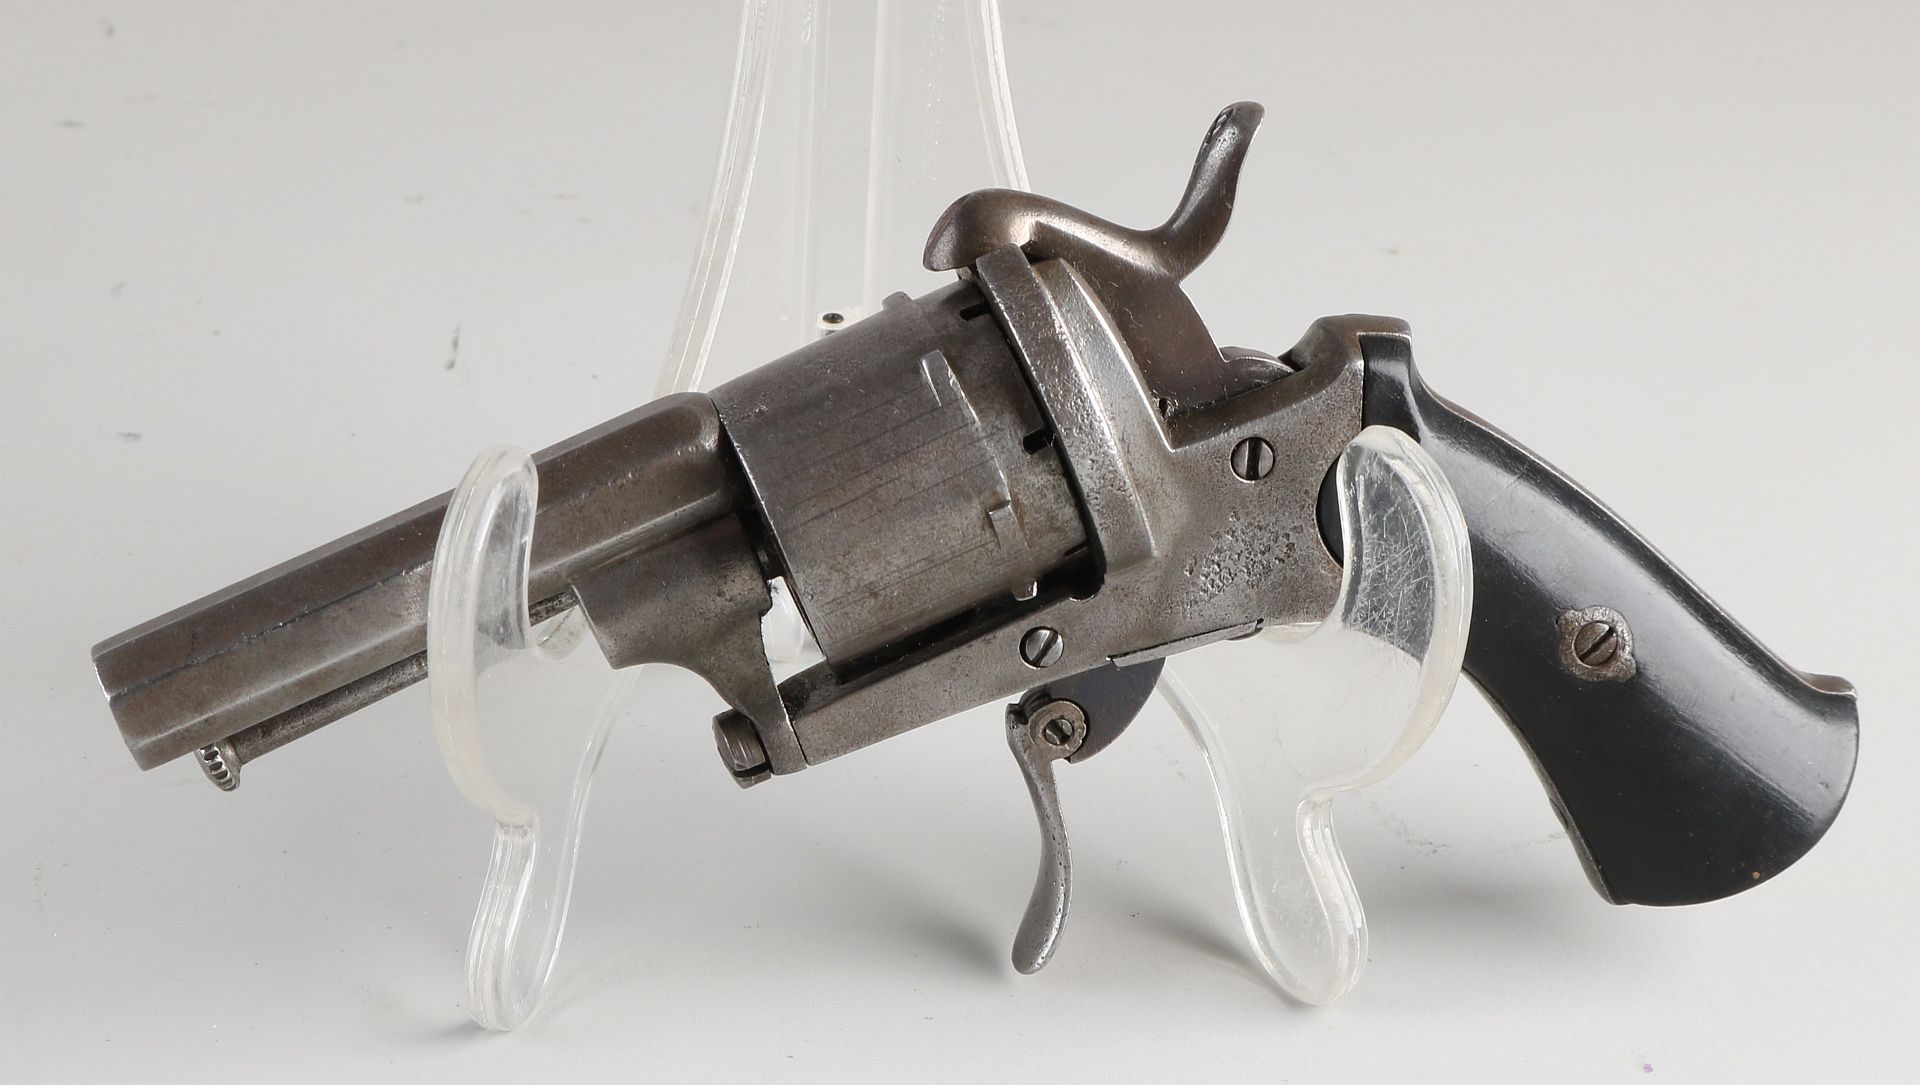 Pinfire revolver